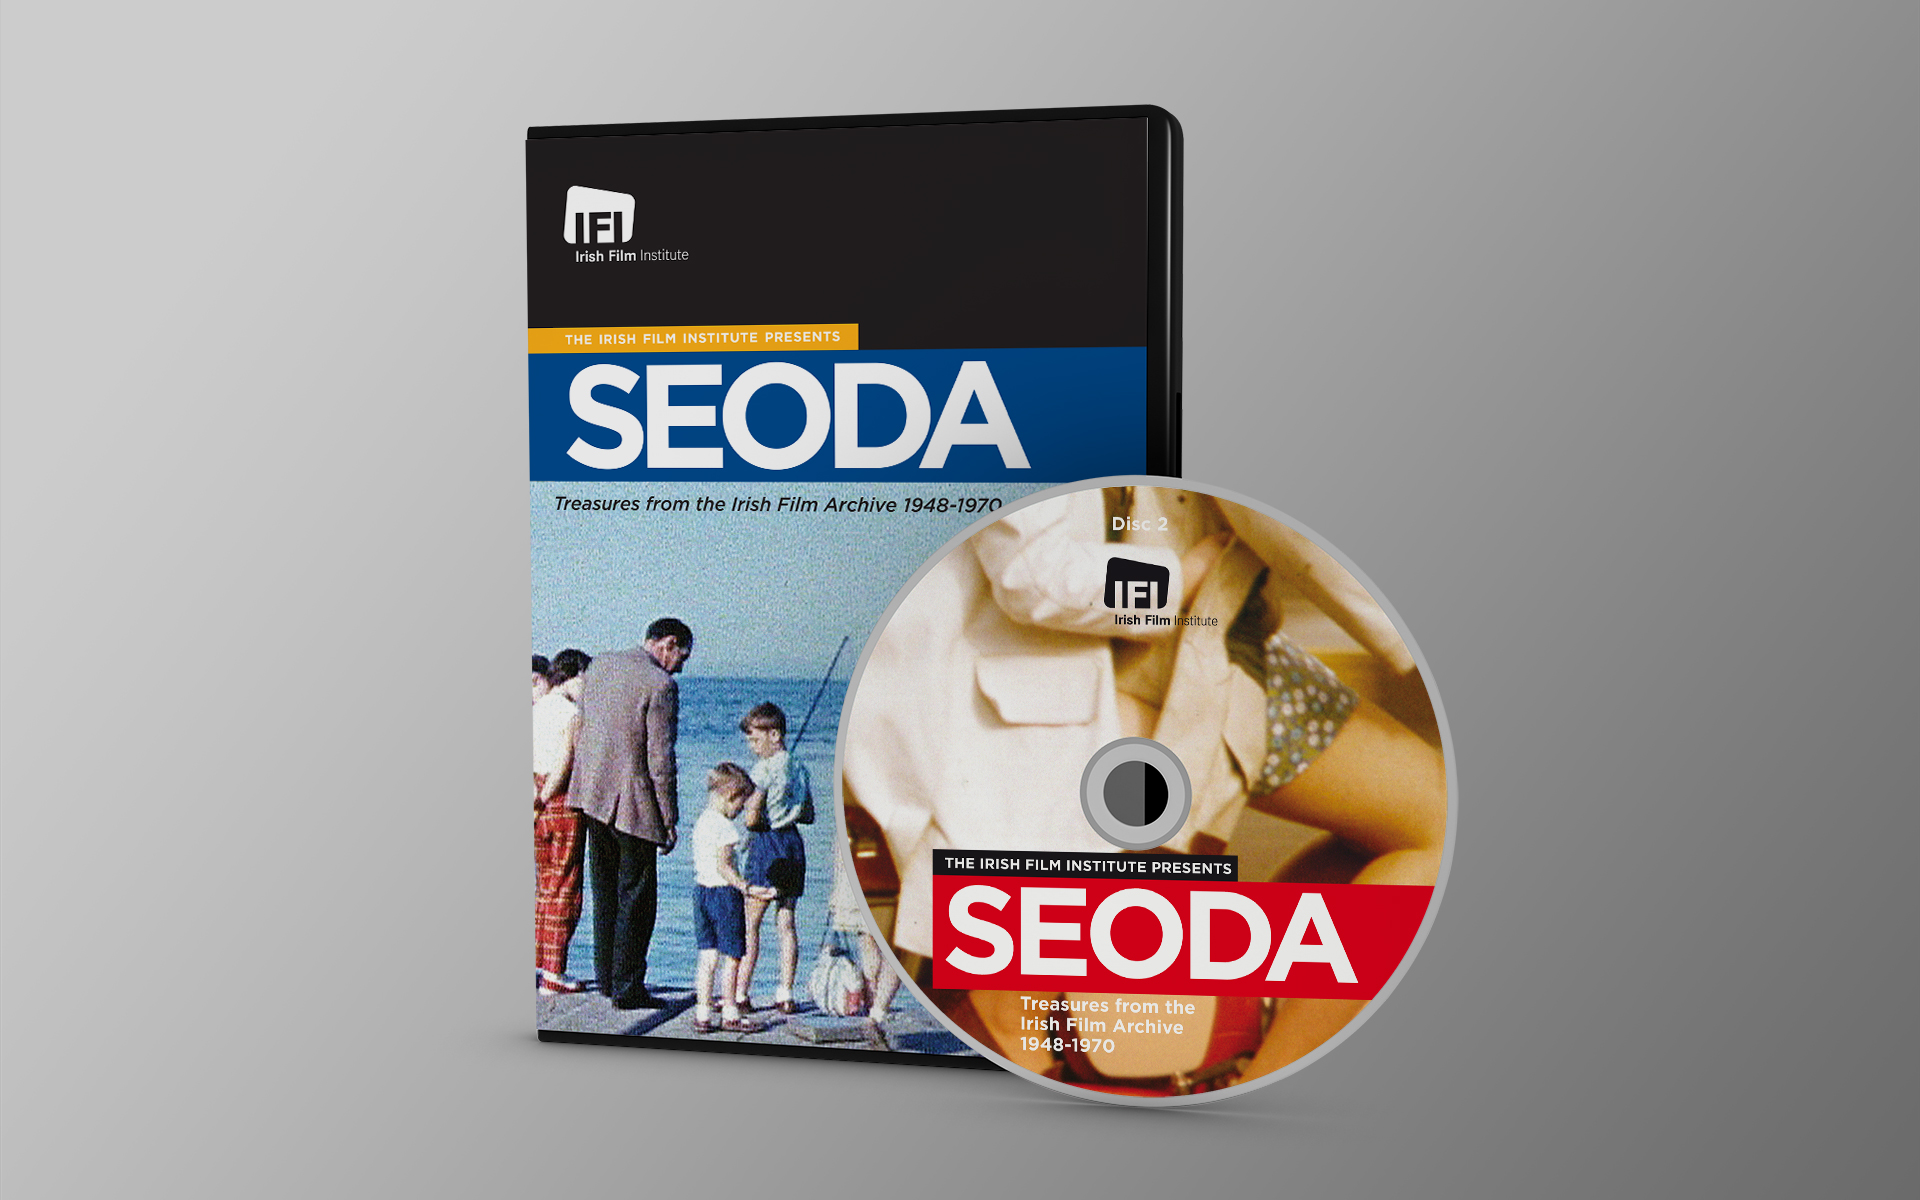 IFI Irish Film Archive Seoda DVD package design